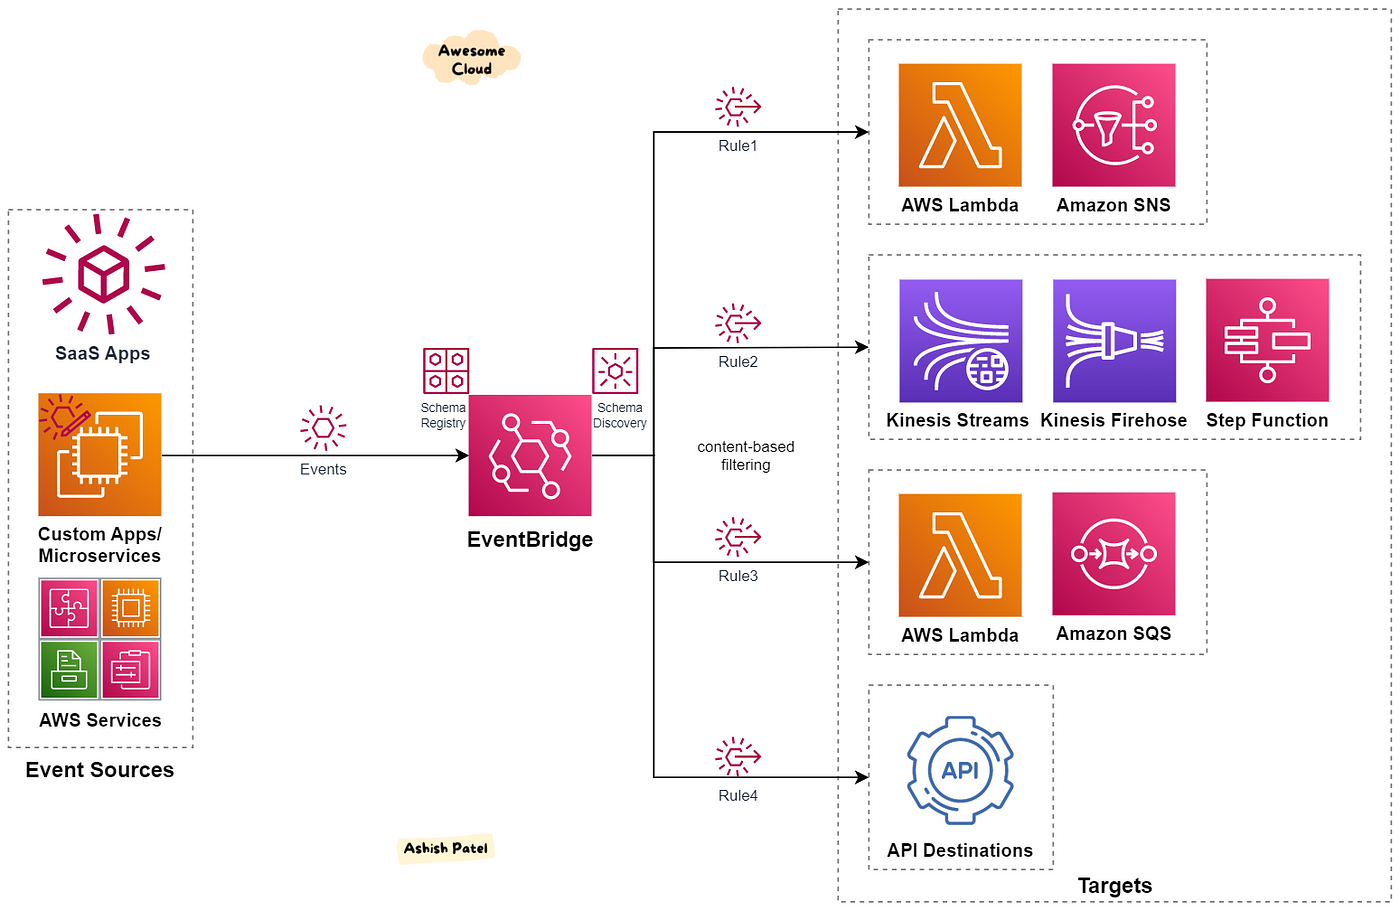 AWS — Amazon EventBridge Overview | by Ashish Patel | Awesome Cloud | Medium